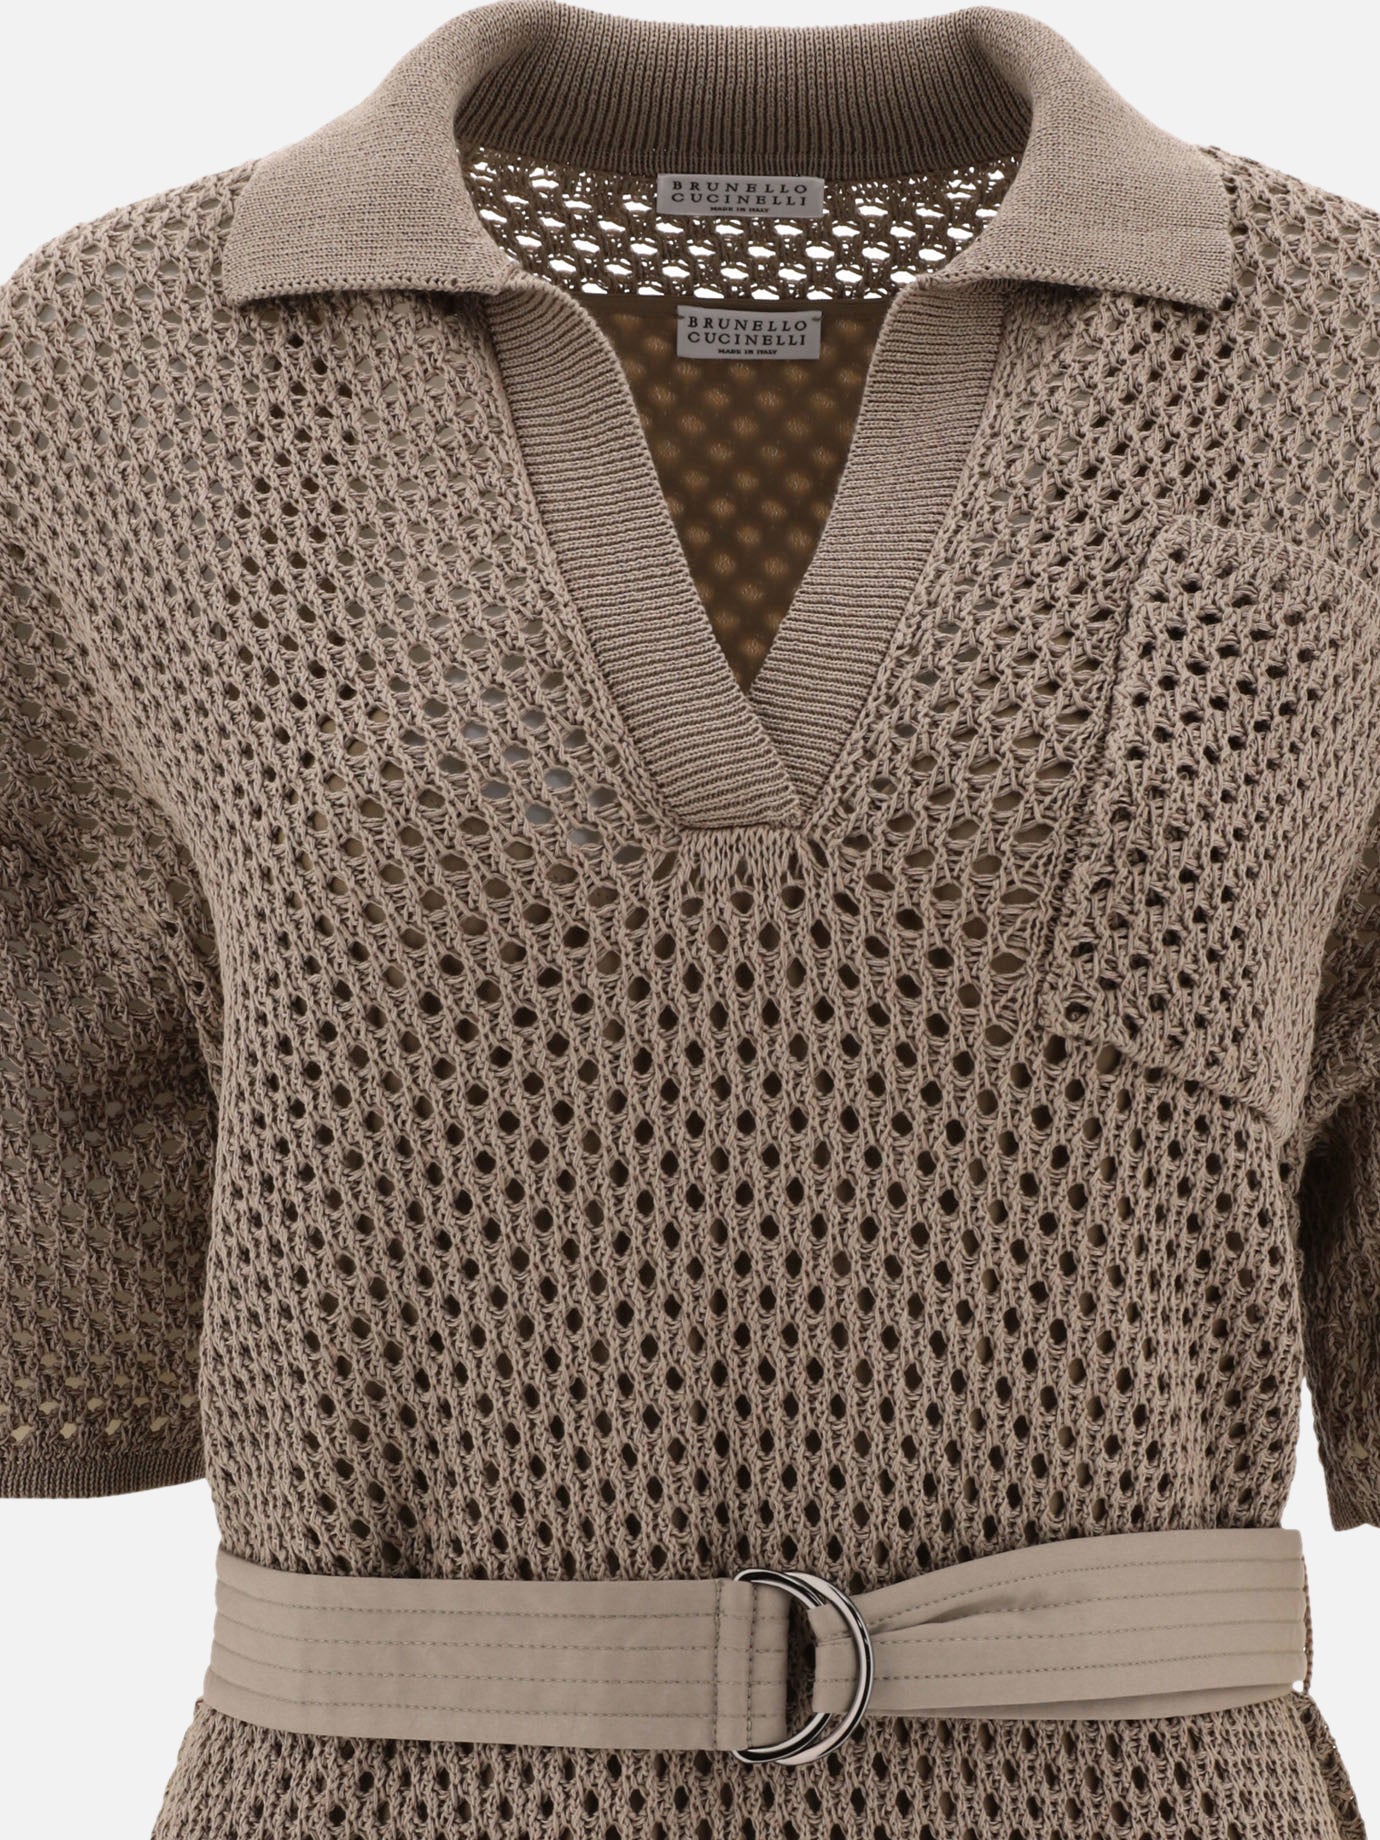 Net knit dress with belt